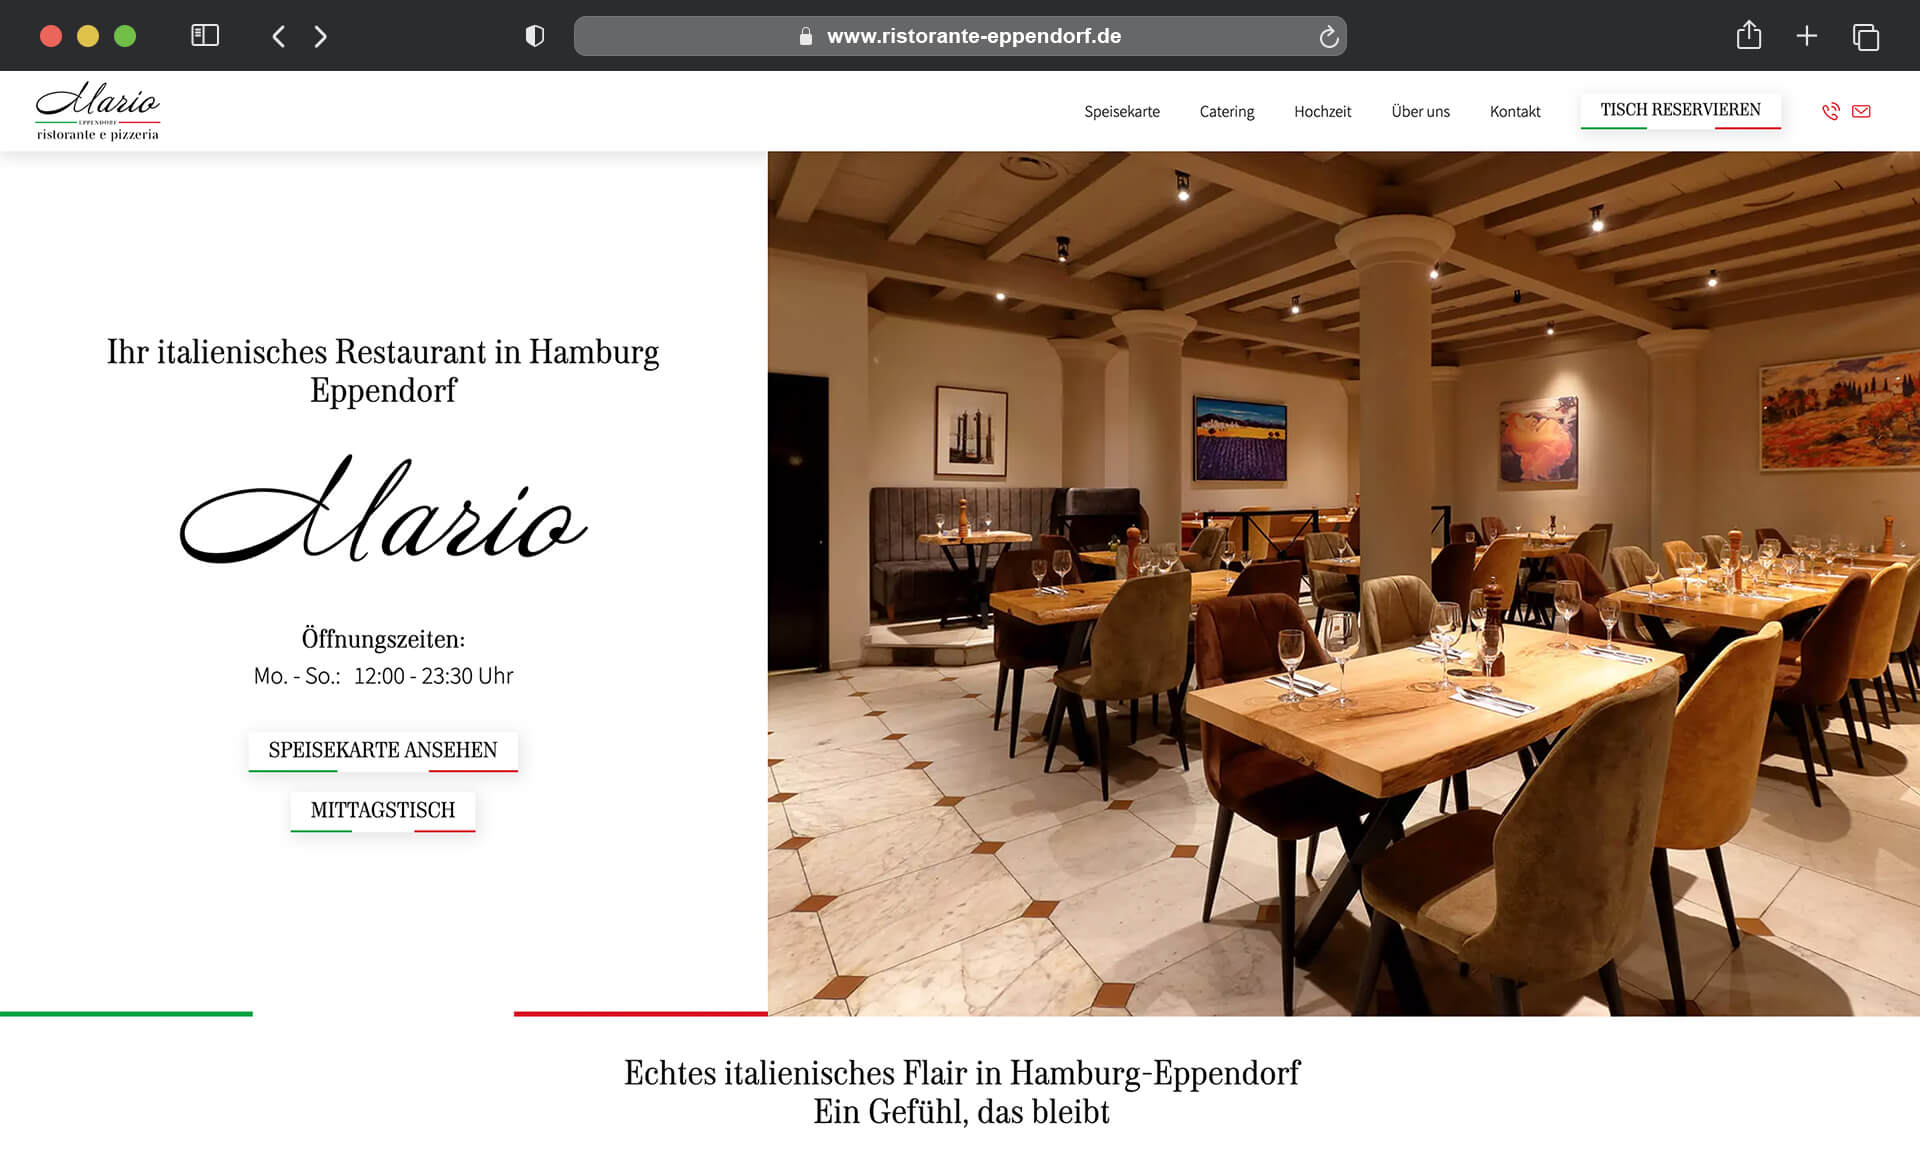 ristorante mario referenz nachher neue website xperients